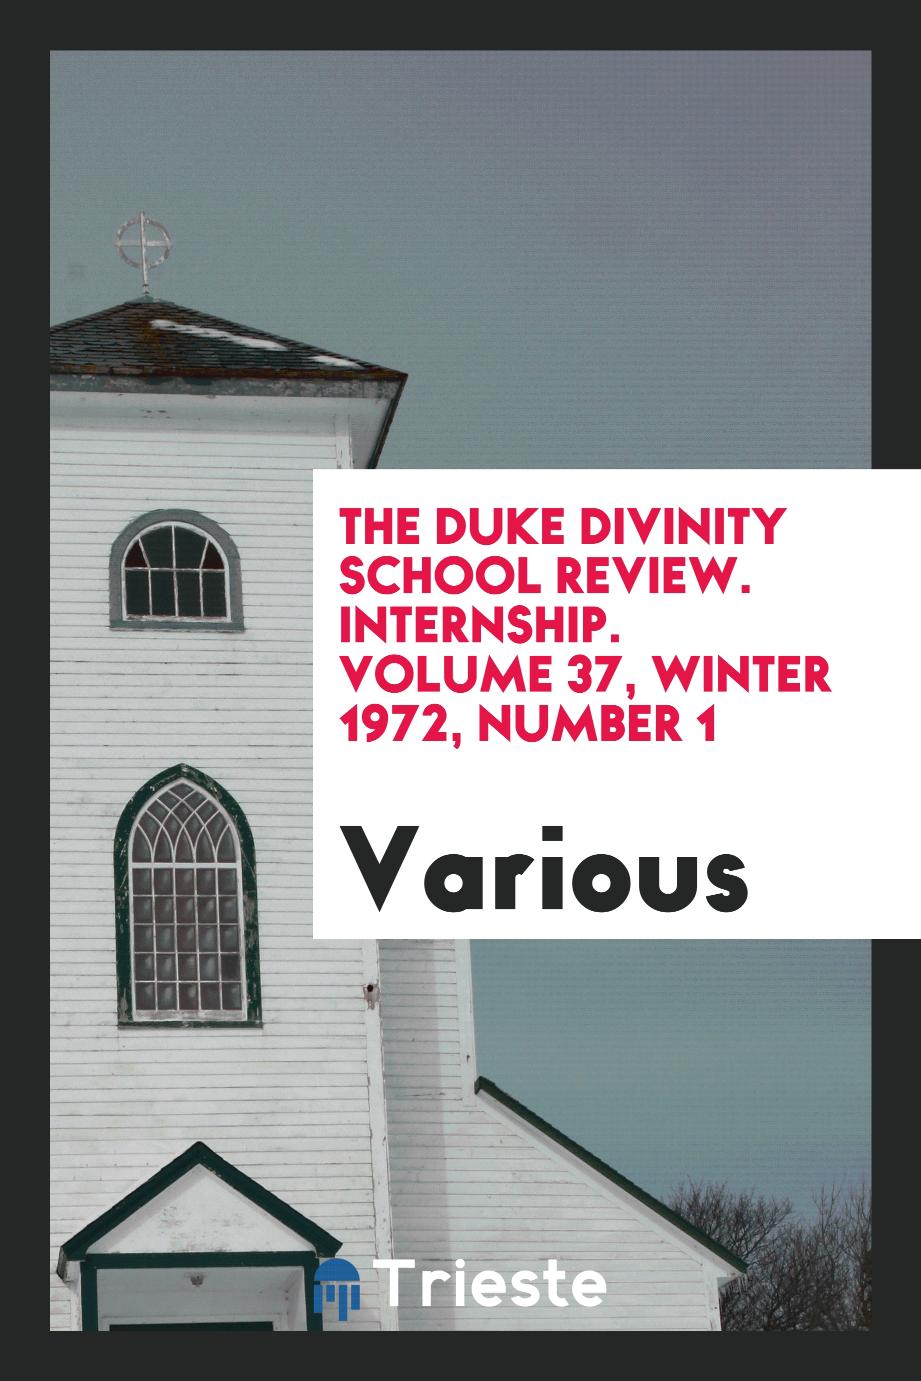 The Duke Divinity School review. Internship. Volume 37, Winter 1972, Number 1